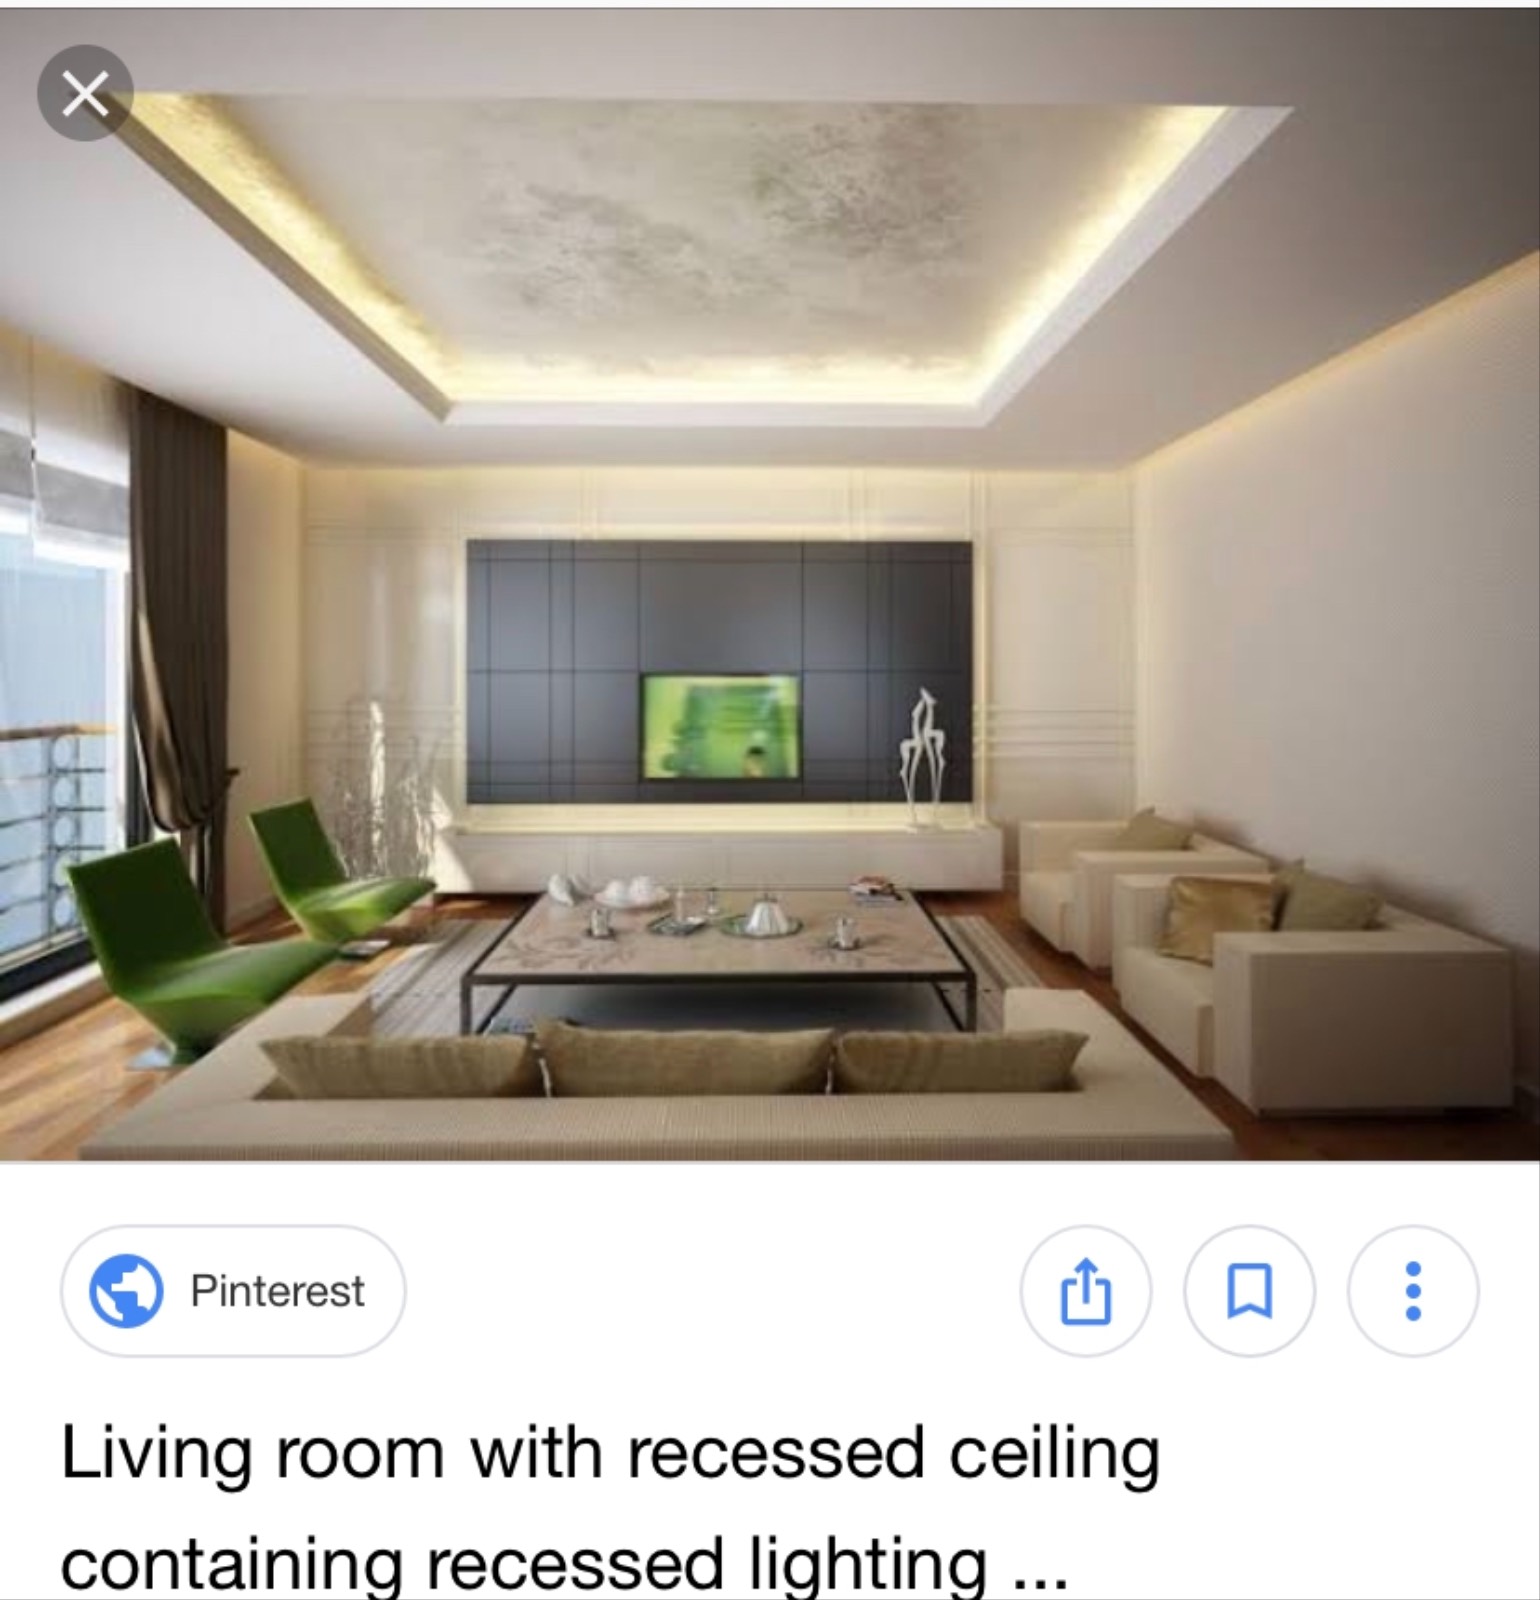  Sunken Ceiling for Simple Design